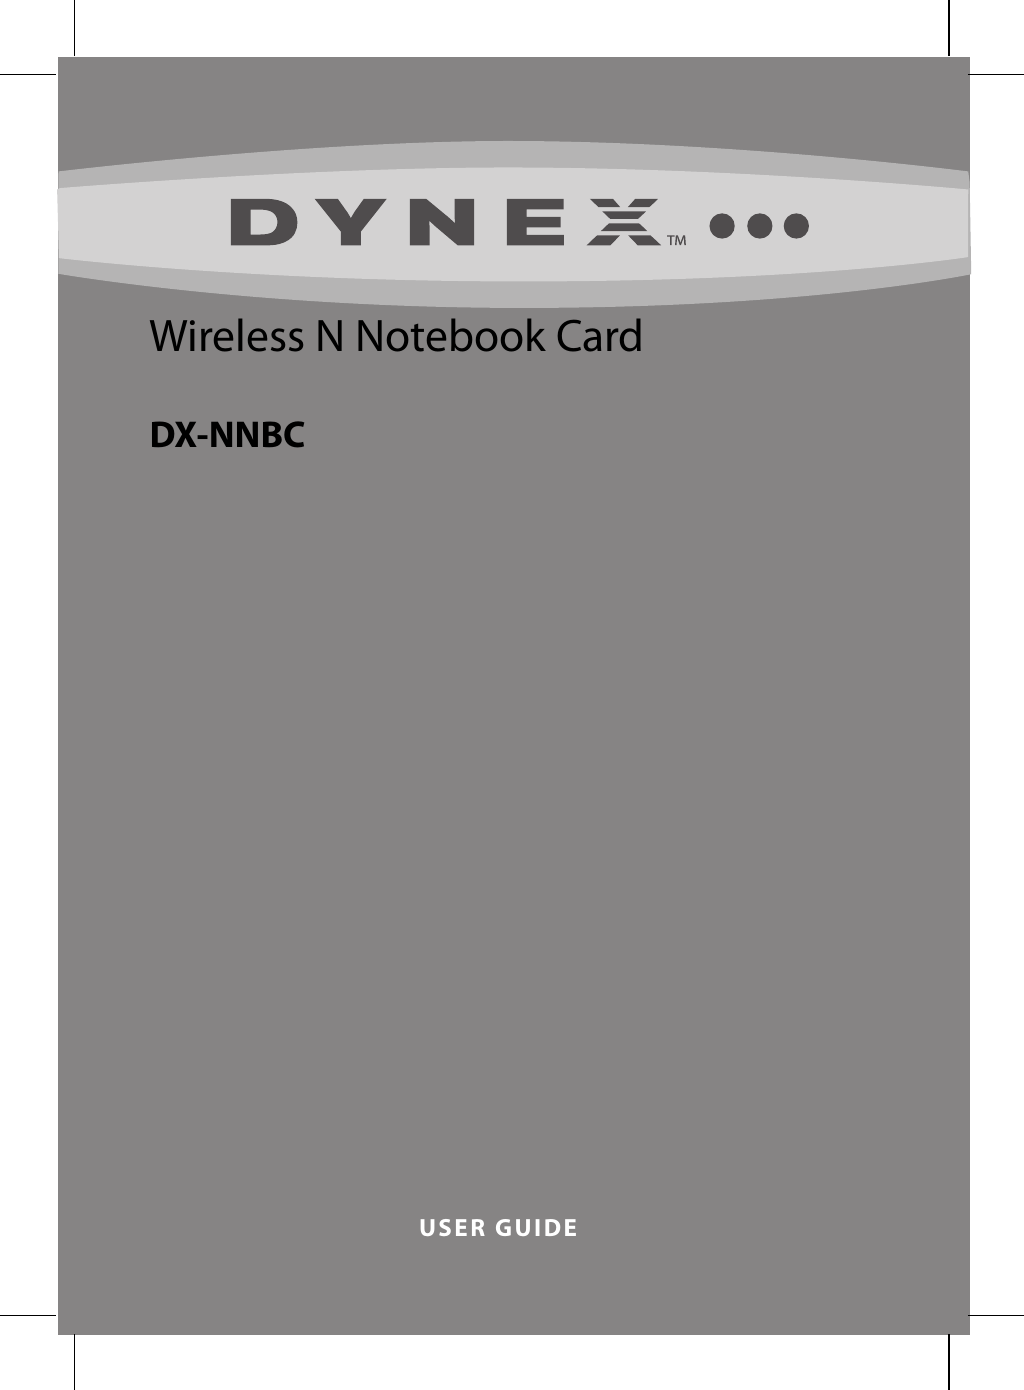 USER GUIDEWireless N Notebook CardDX-NNBC